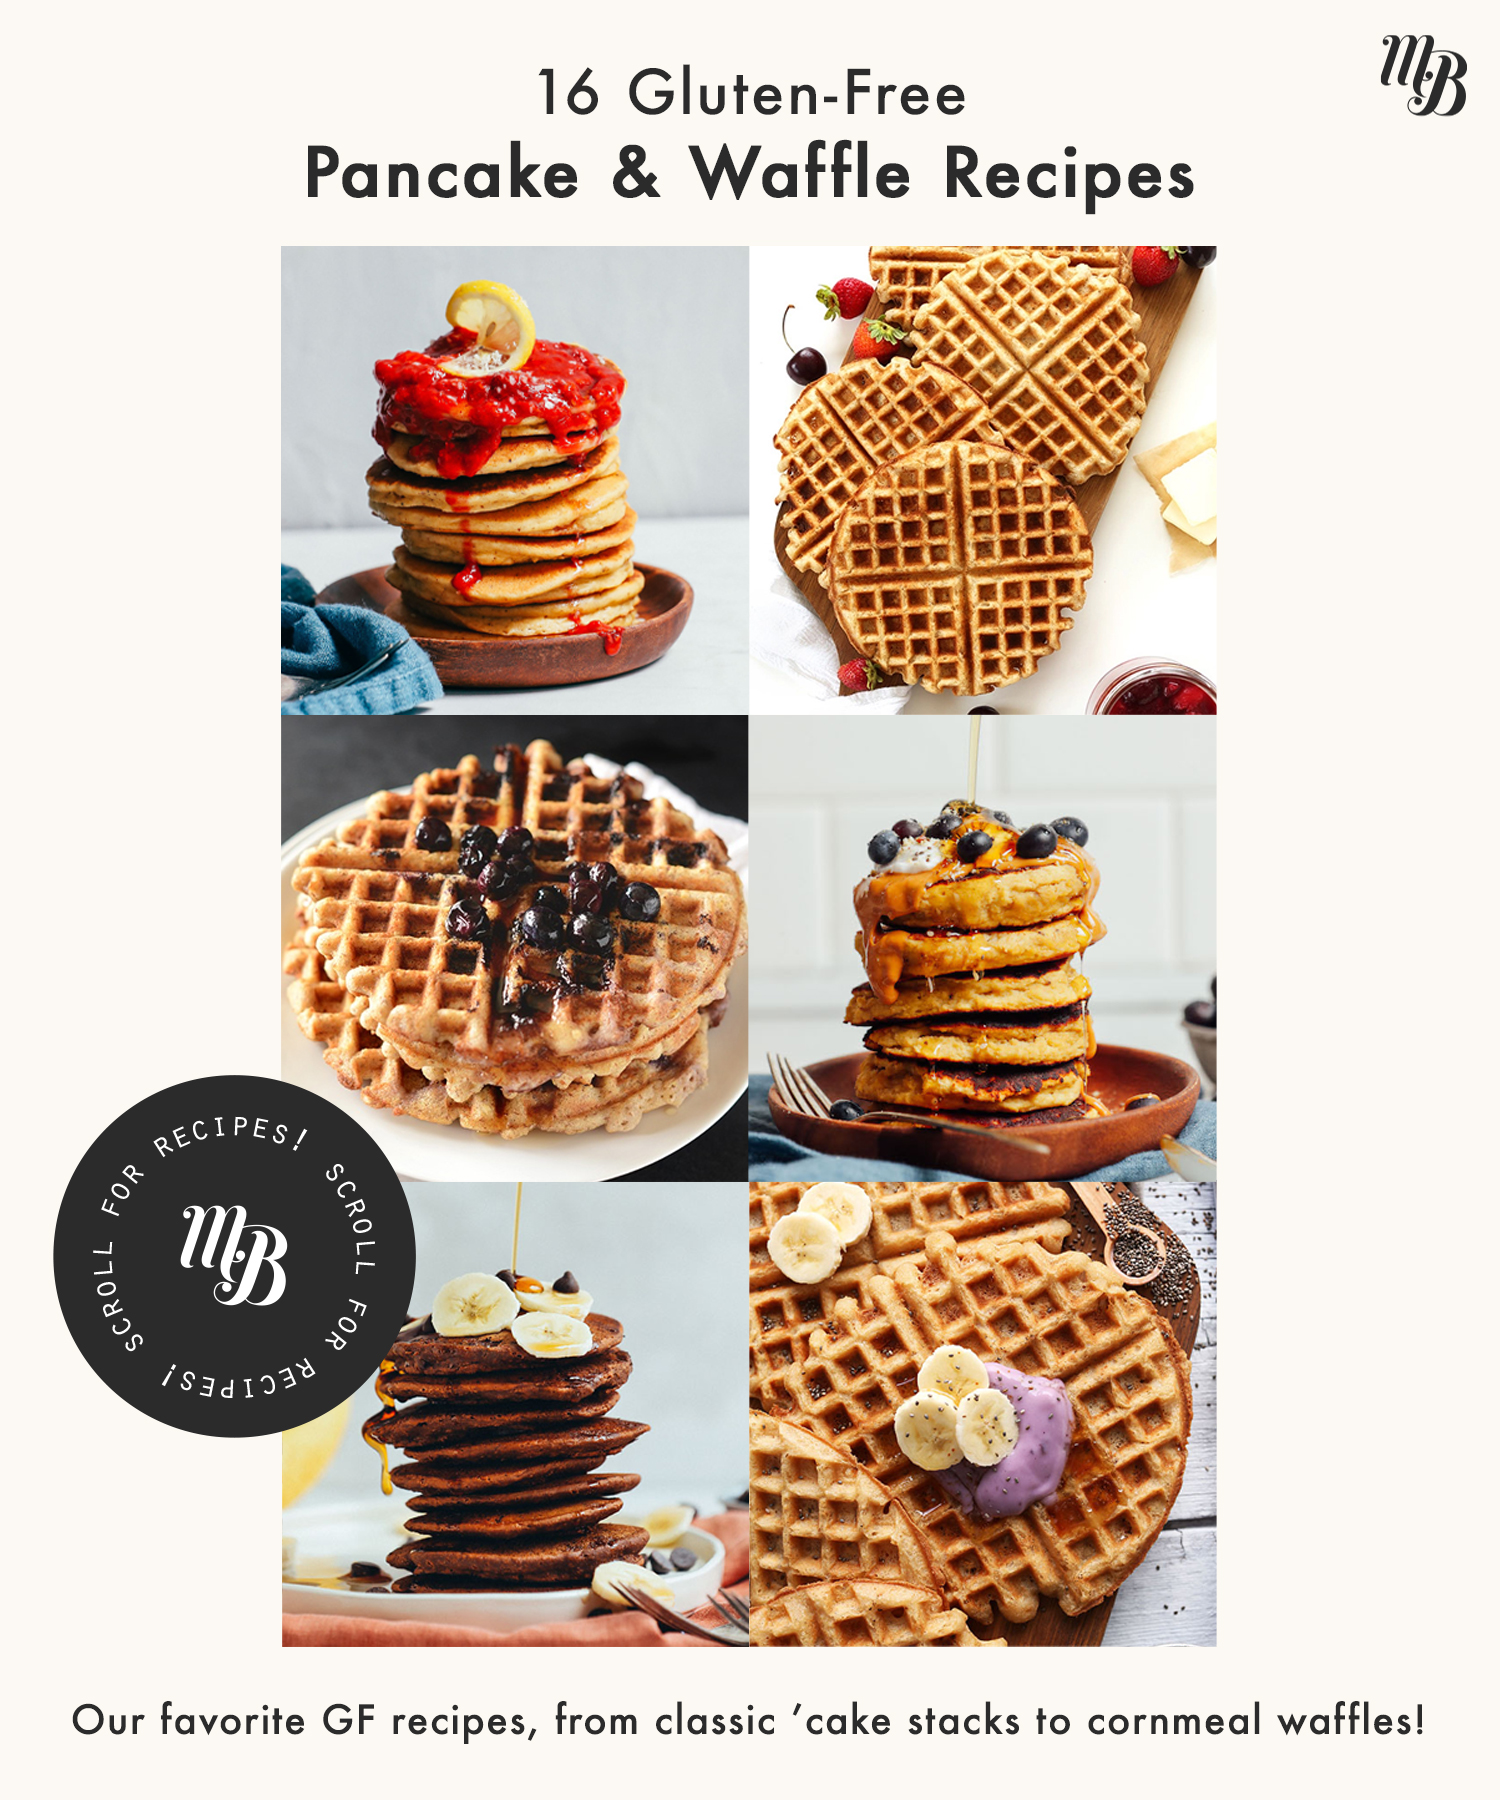 Assortment of gluten-free pancake and waffle recipes